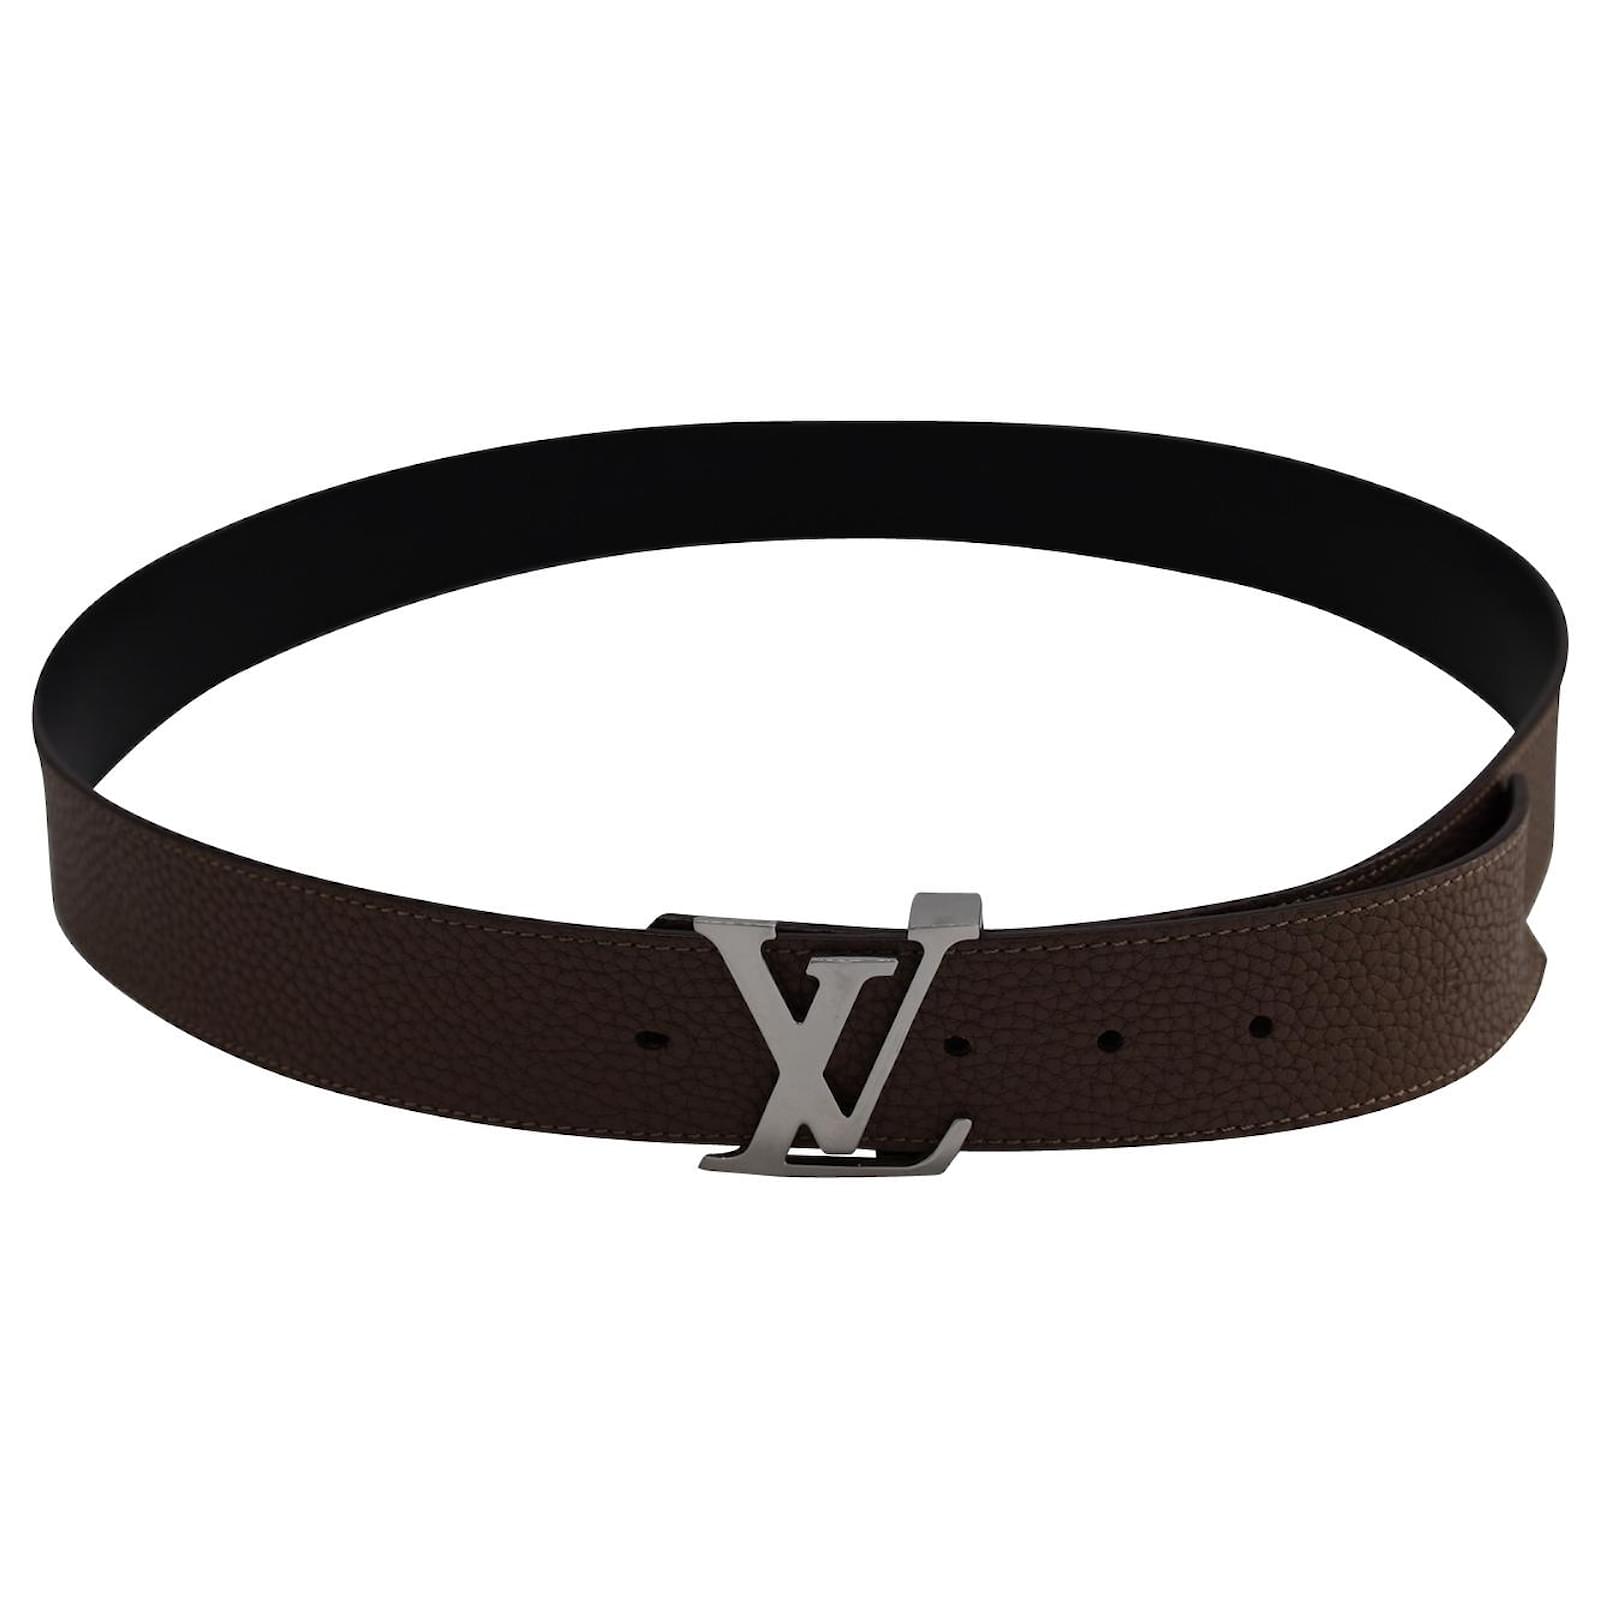 Louis Vuitton LV Initiales 40mm Reversible Belt Brown + Calf Leather. Size 85 cm